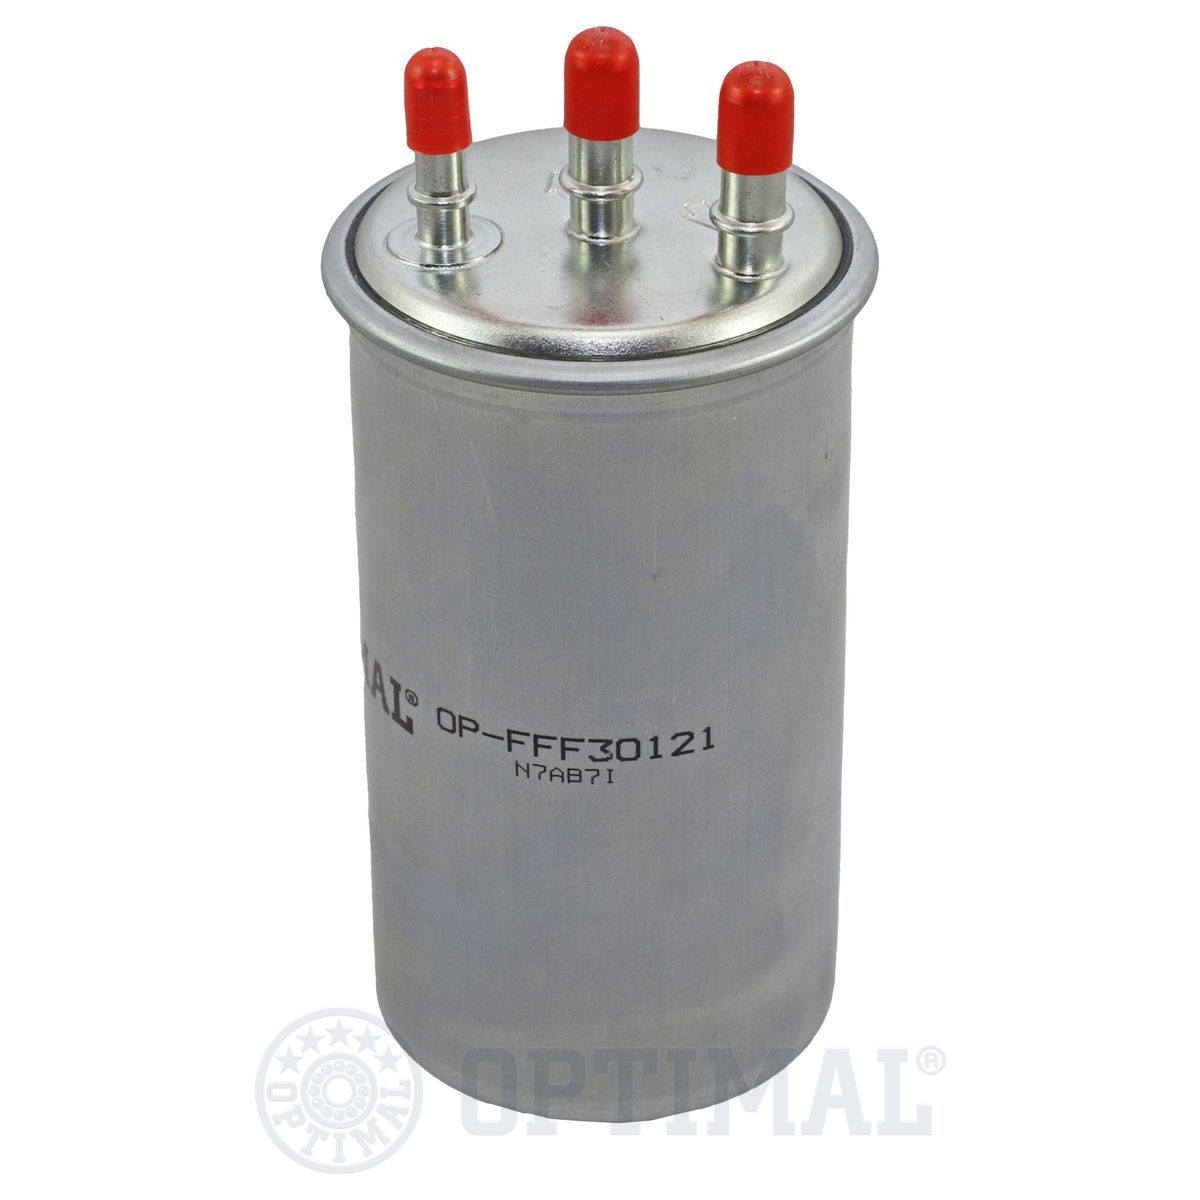 OPTIMAL OP-FFF30121 Fuel filter 16 40 008 84R